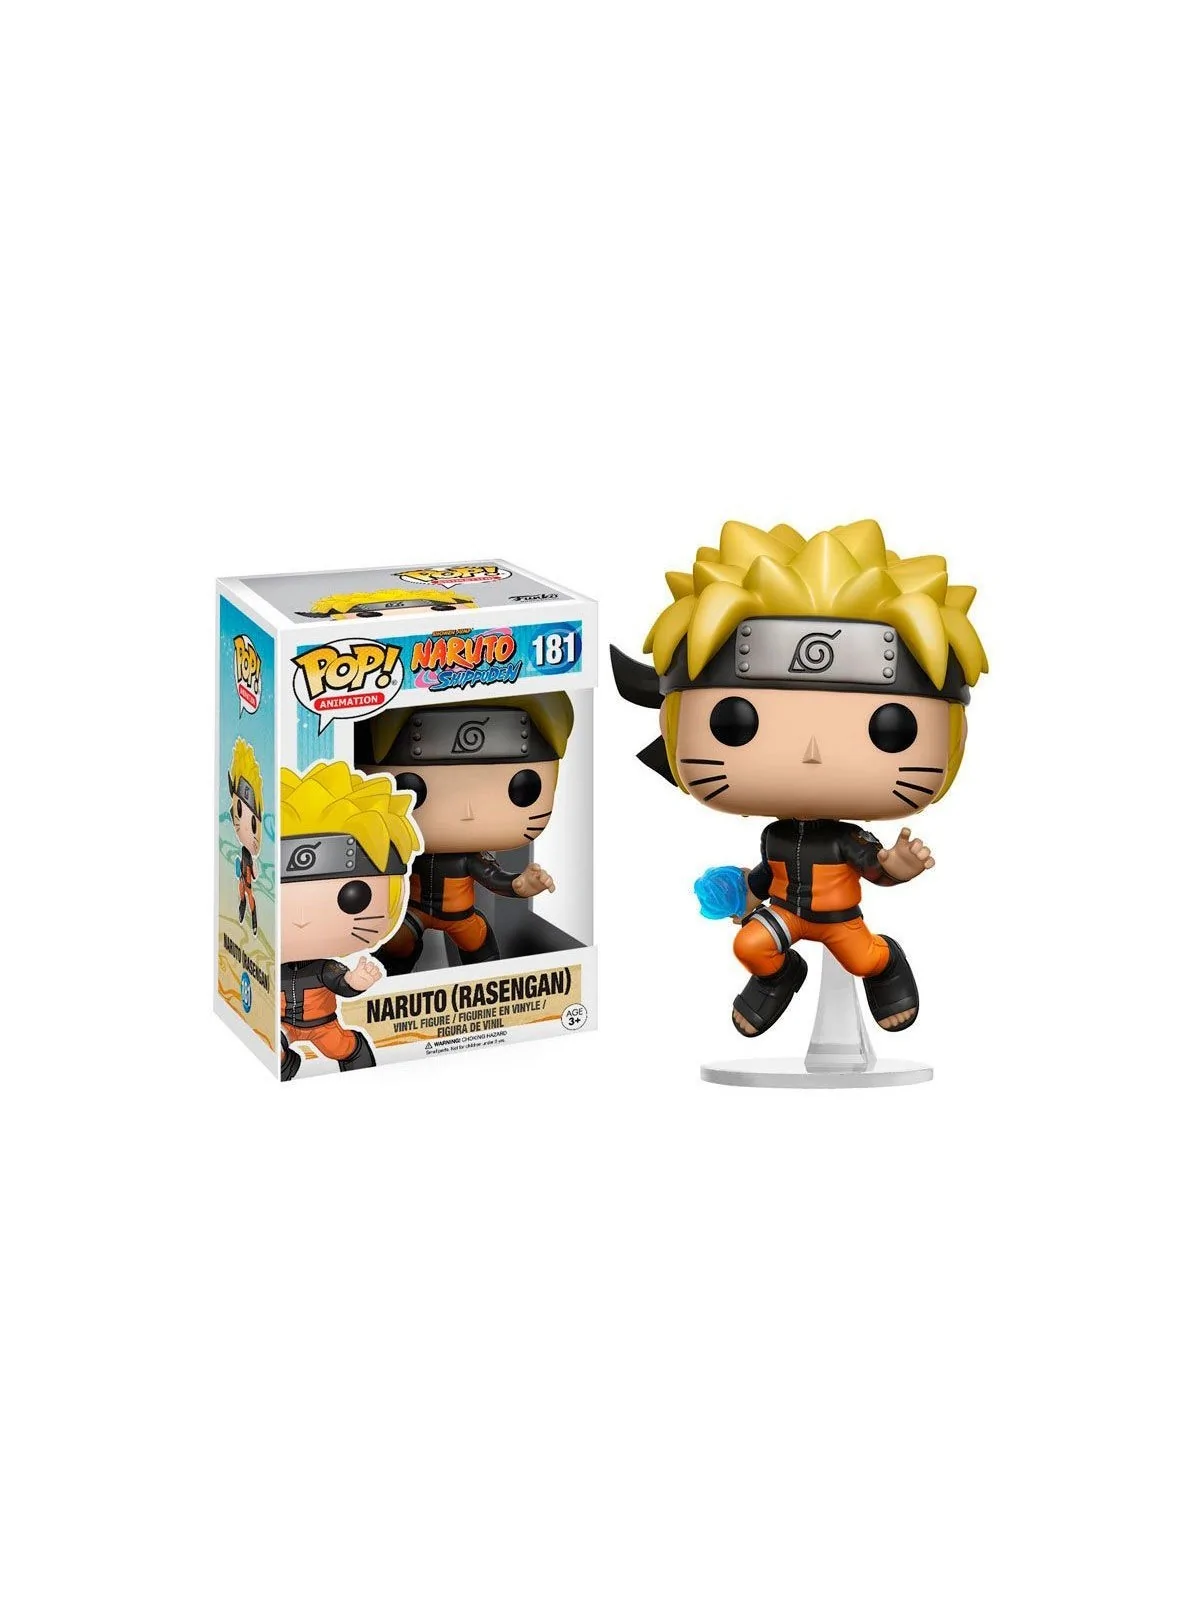 Comprar Funko POP! Naruto Shippuden Naruto Rasegan (181) barato al mej